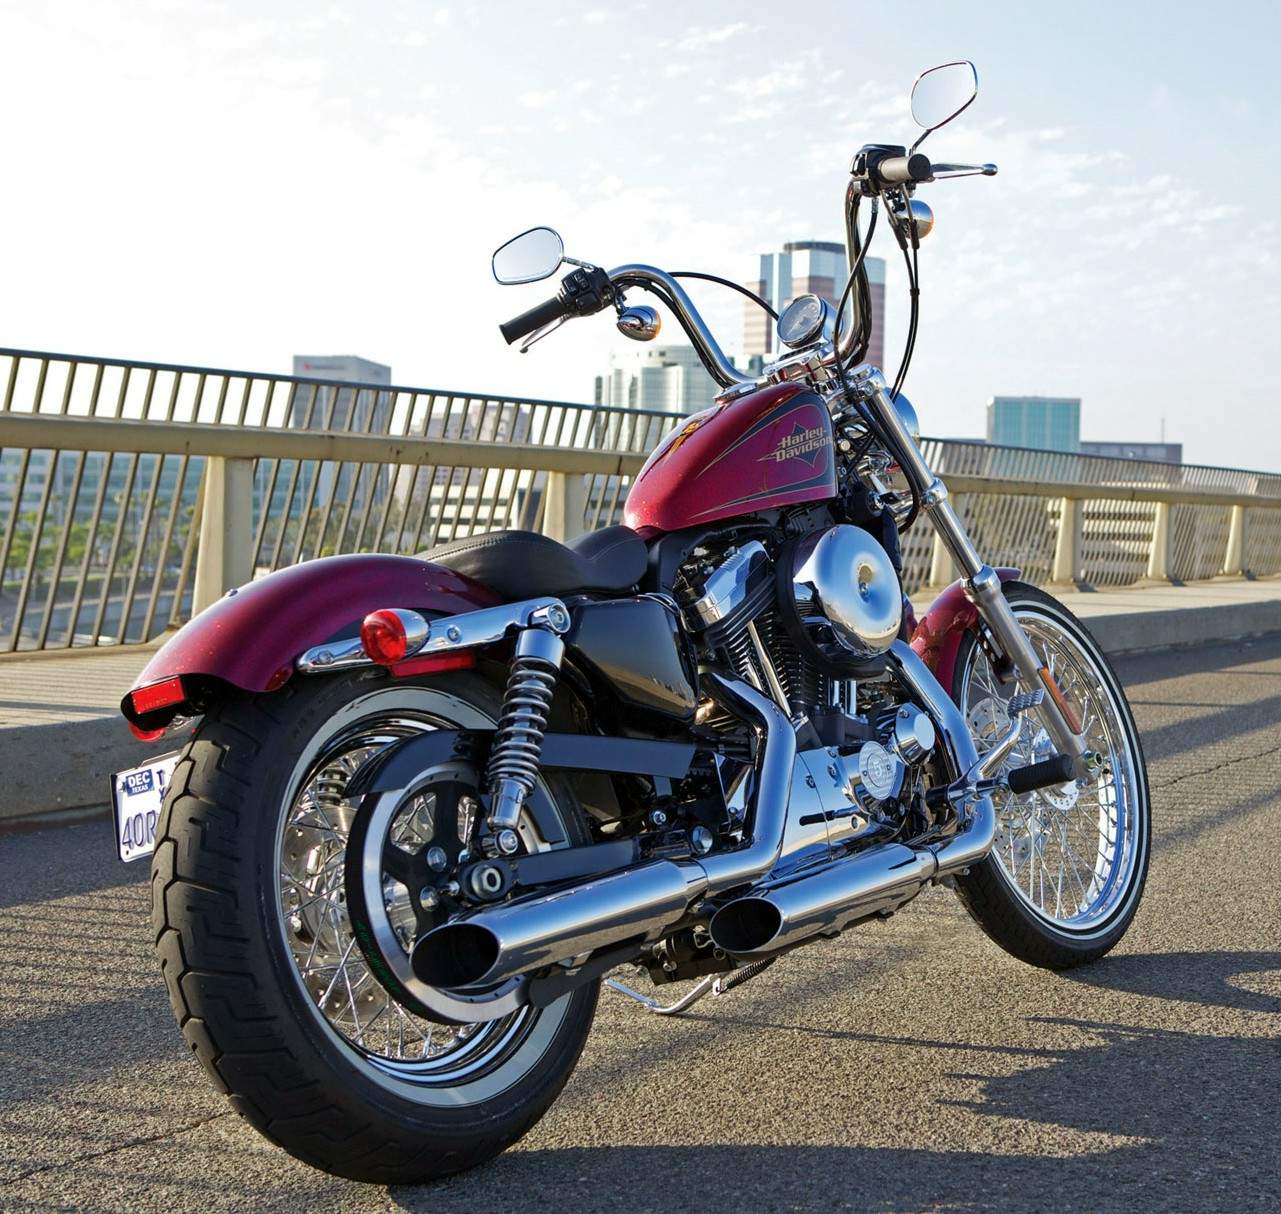 Мотоцикл Harley Davidson XL 1200V Seventy Two 2013